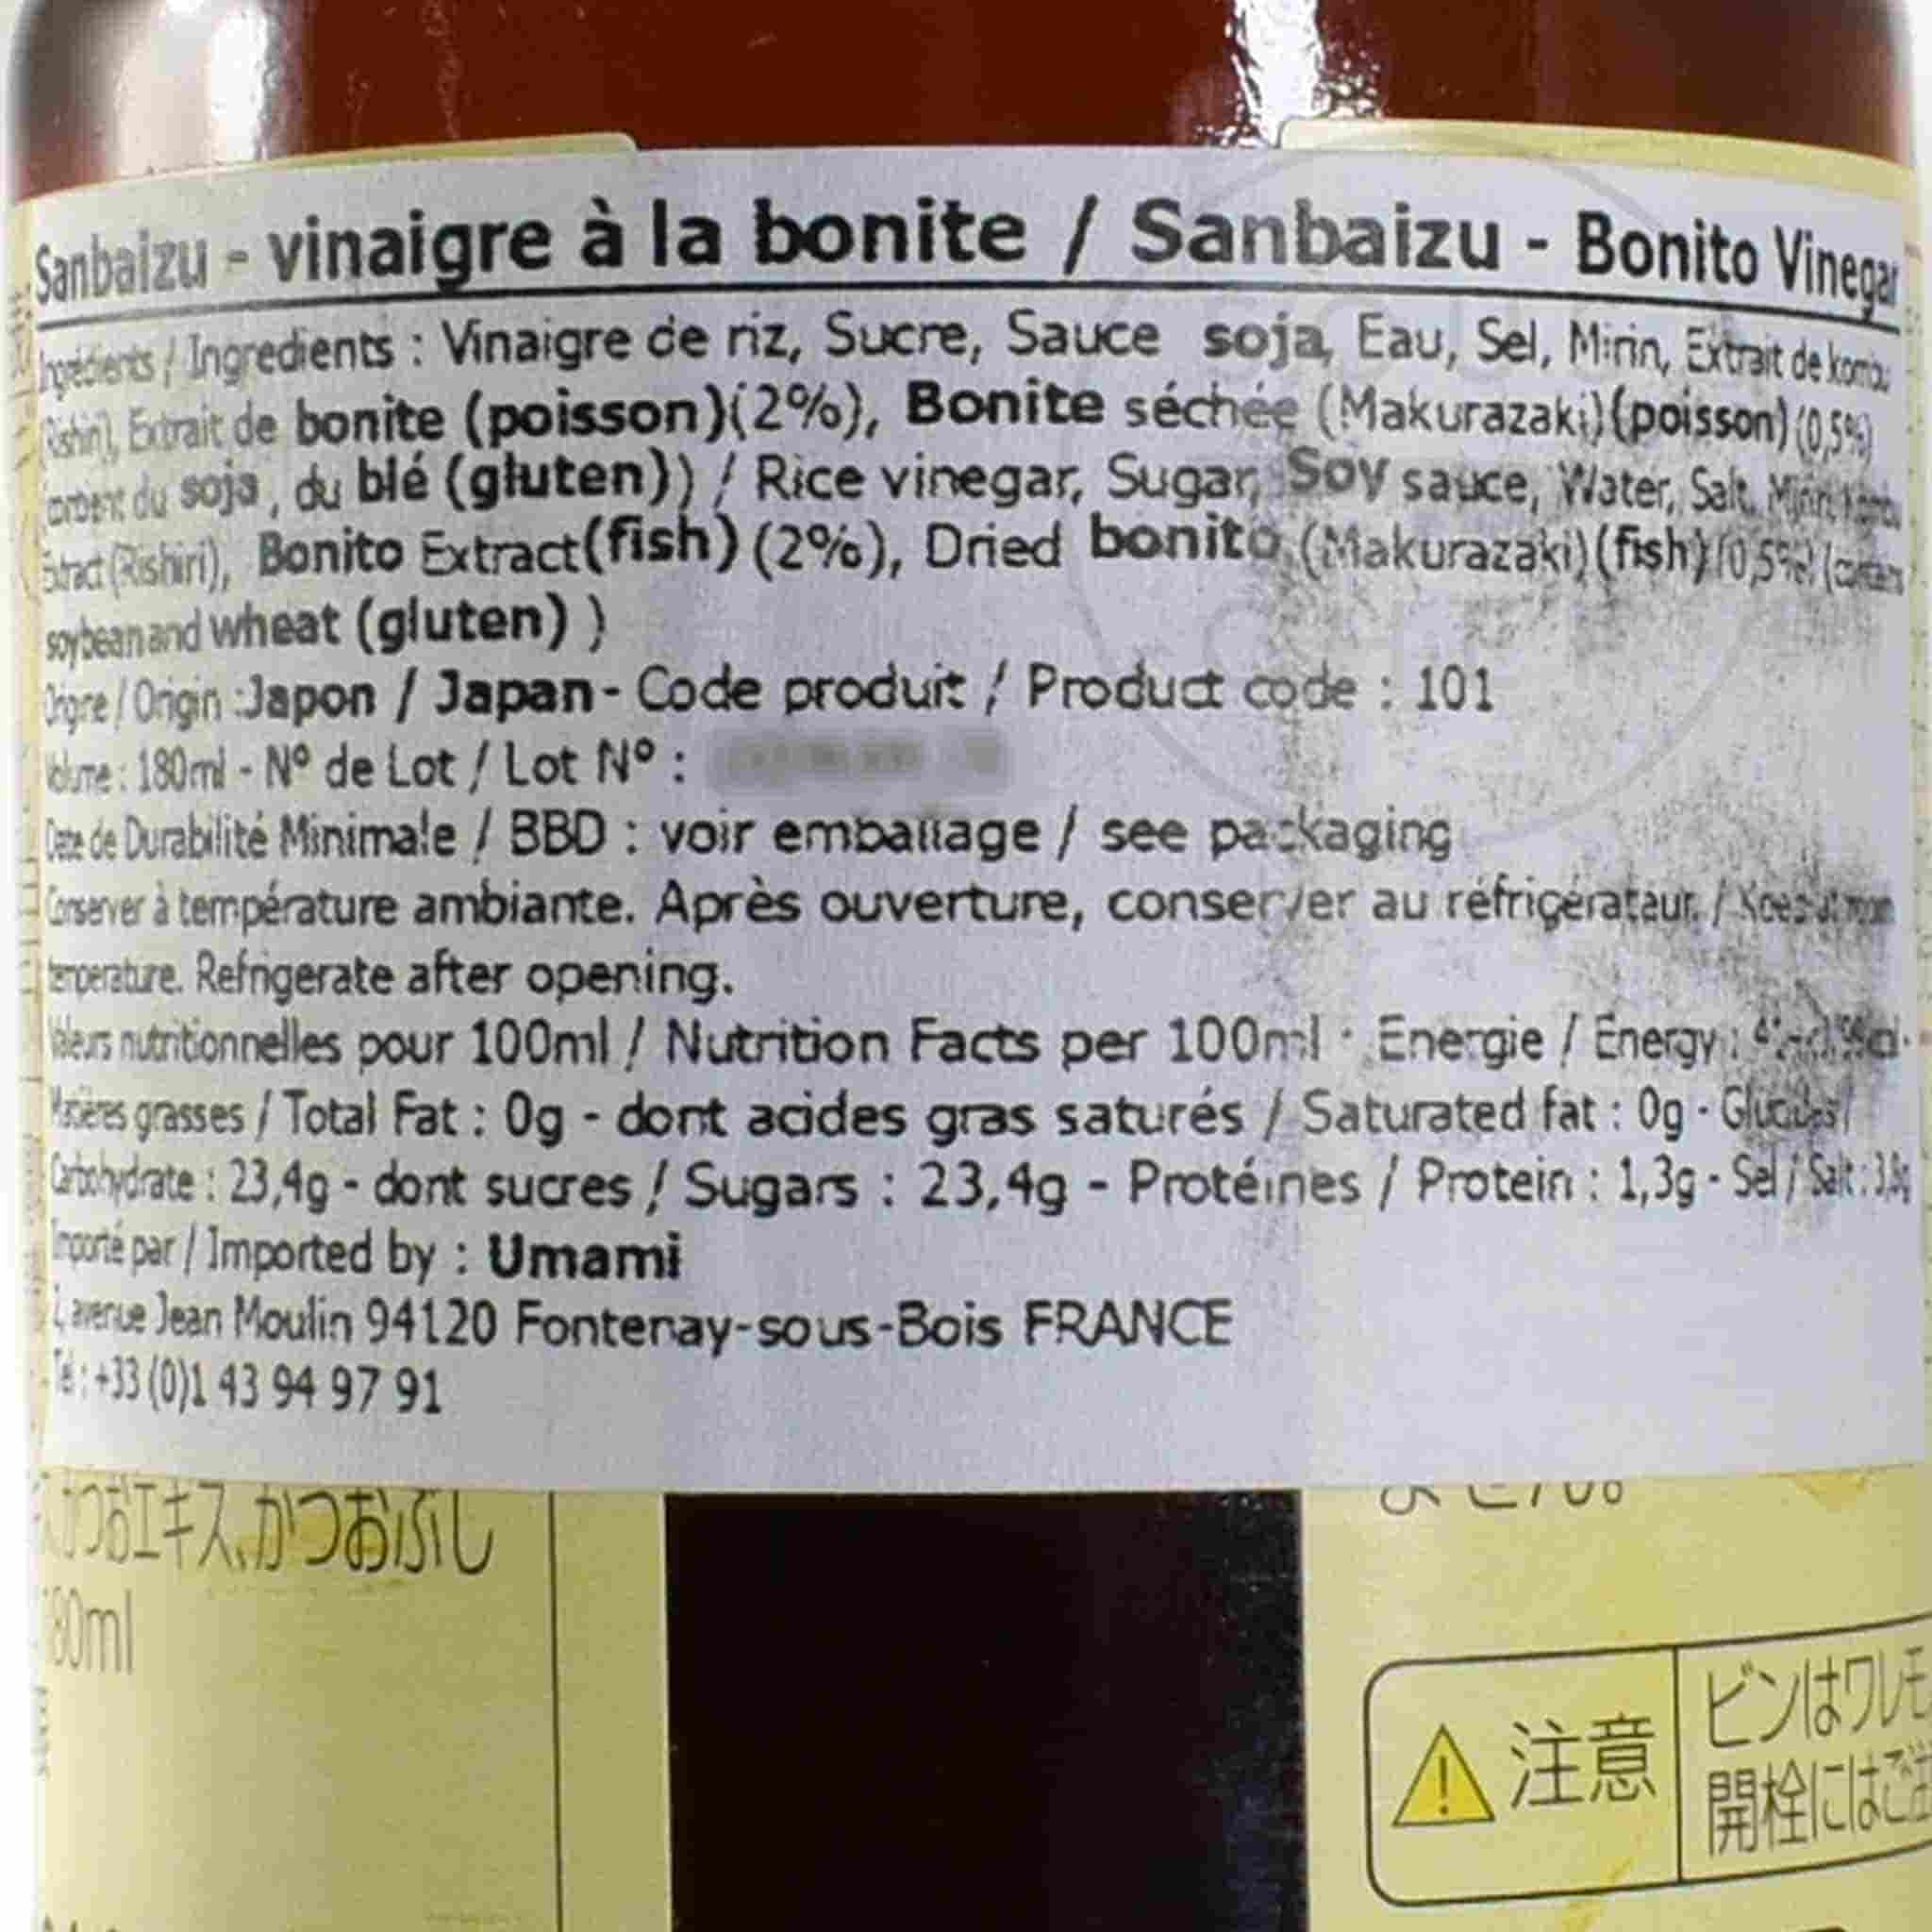 Sanbaizu Vinegar With Bonito 180ml Ingredients